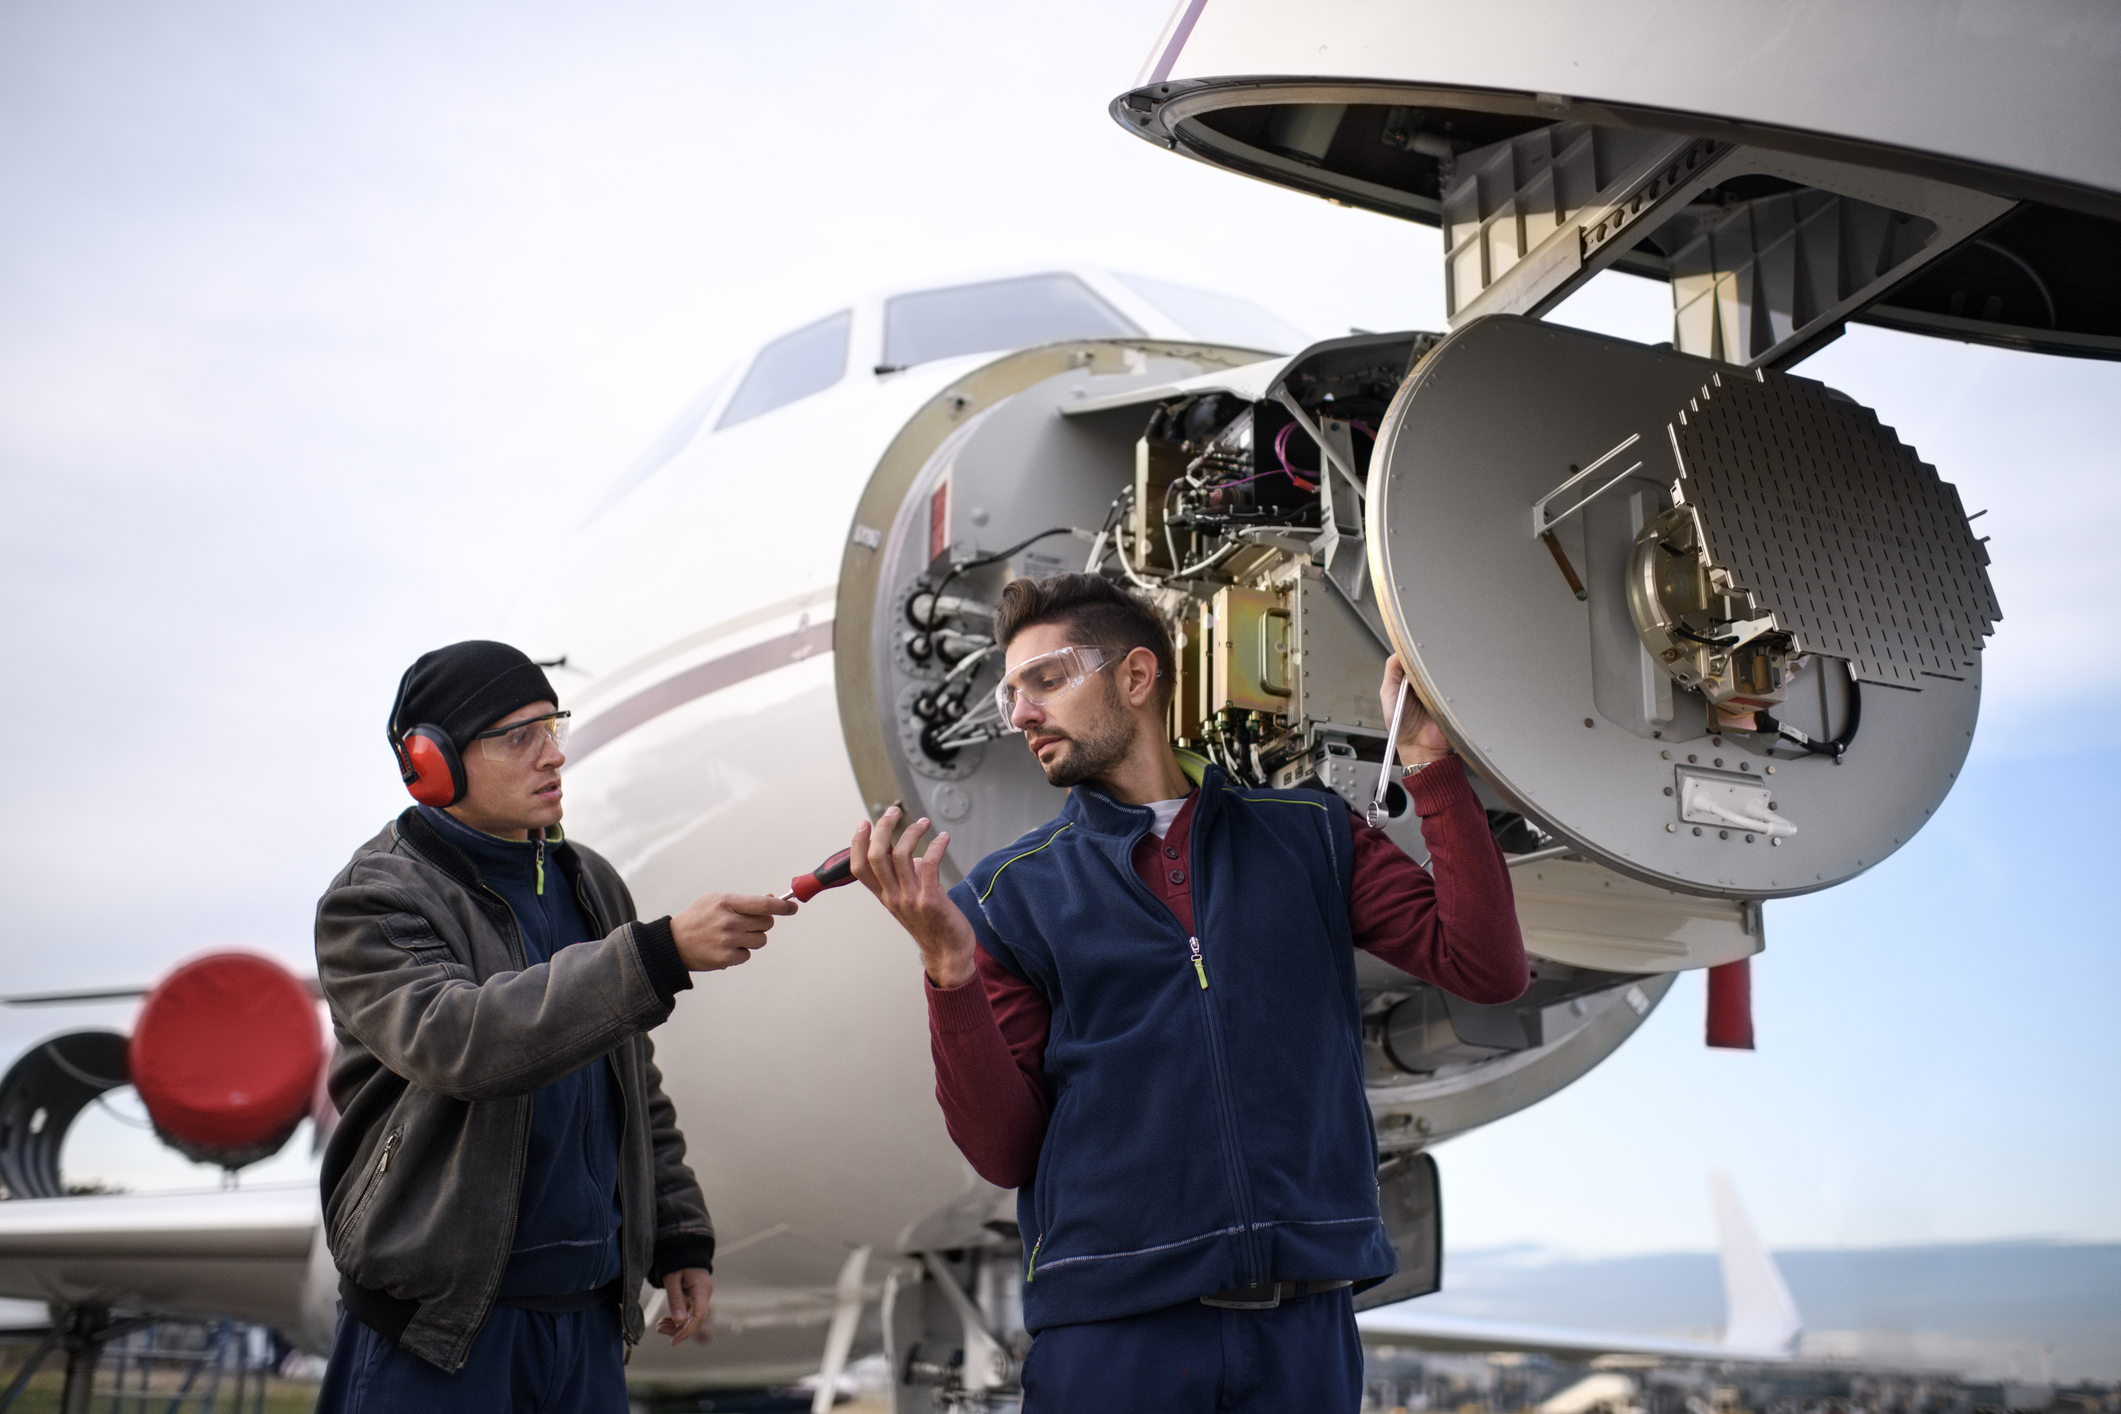 Aircraft mechanics service a small plane